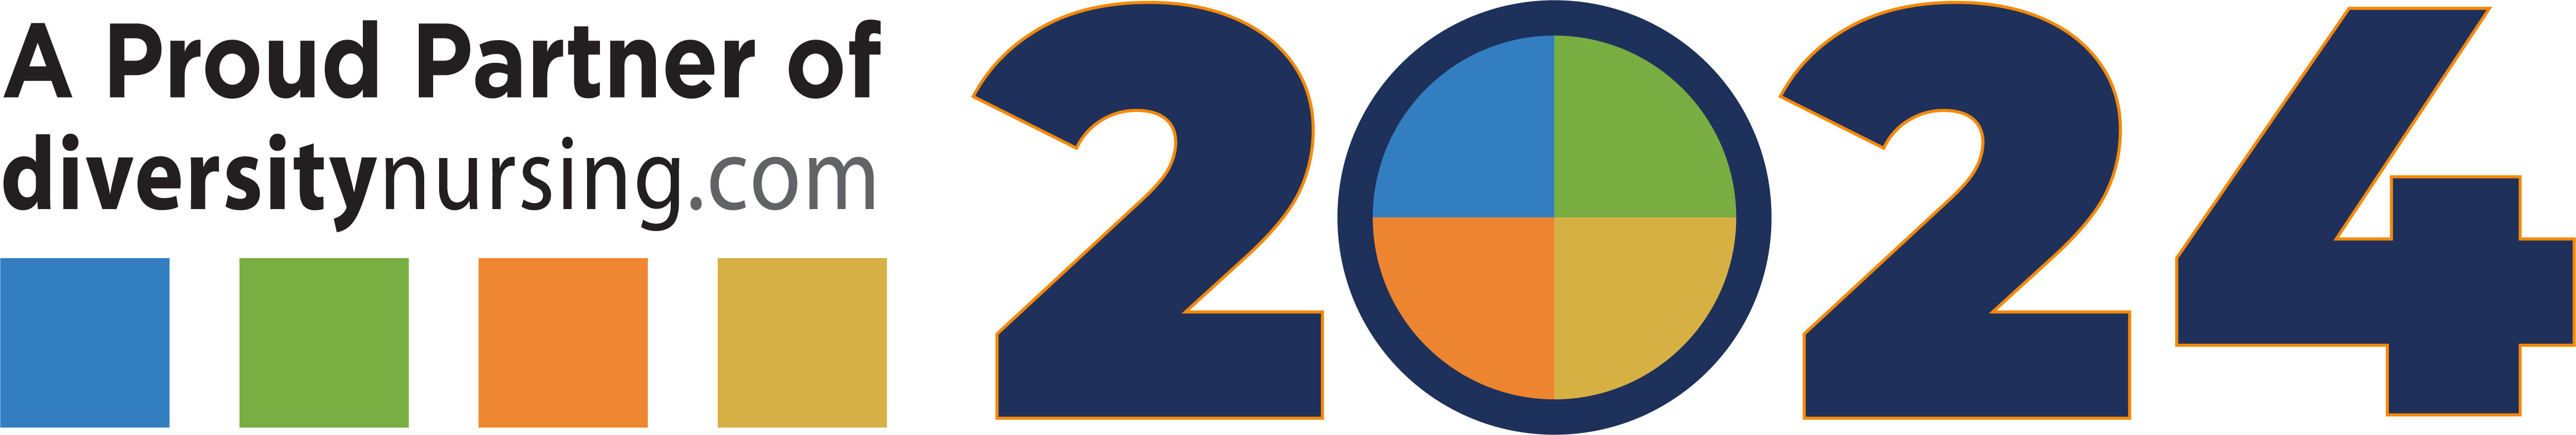 A Proud Partner of DiversityNursing.com 2024 (logo)